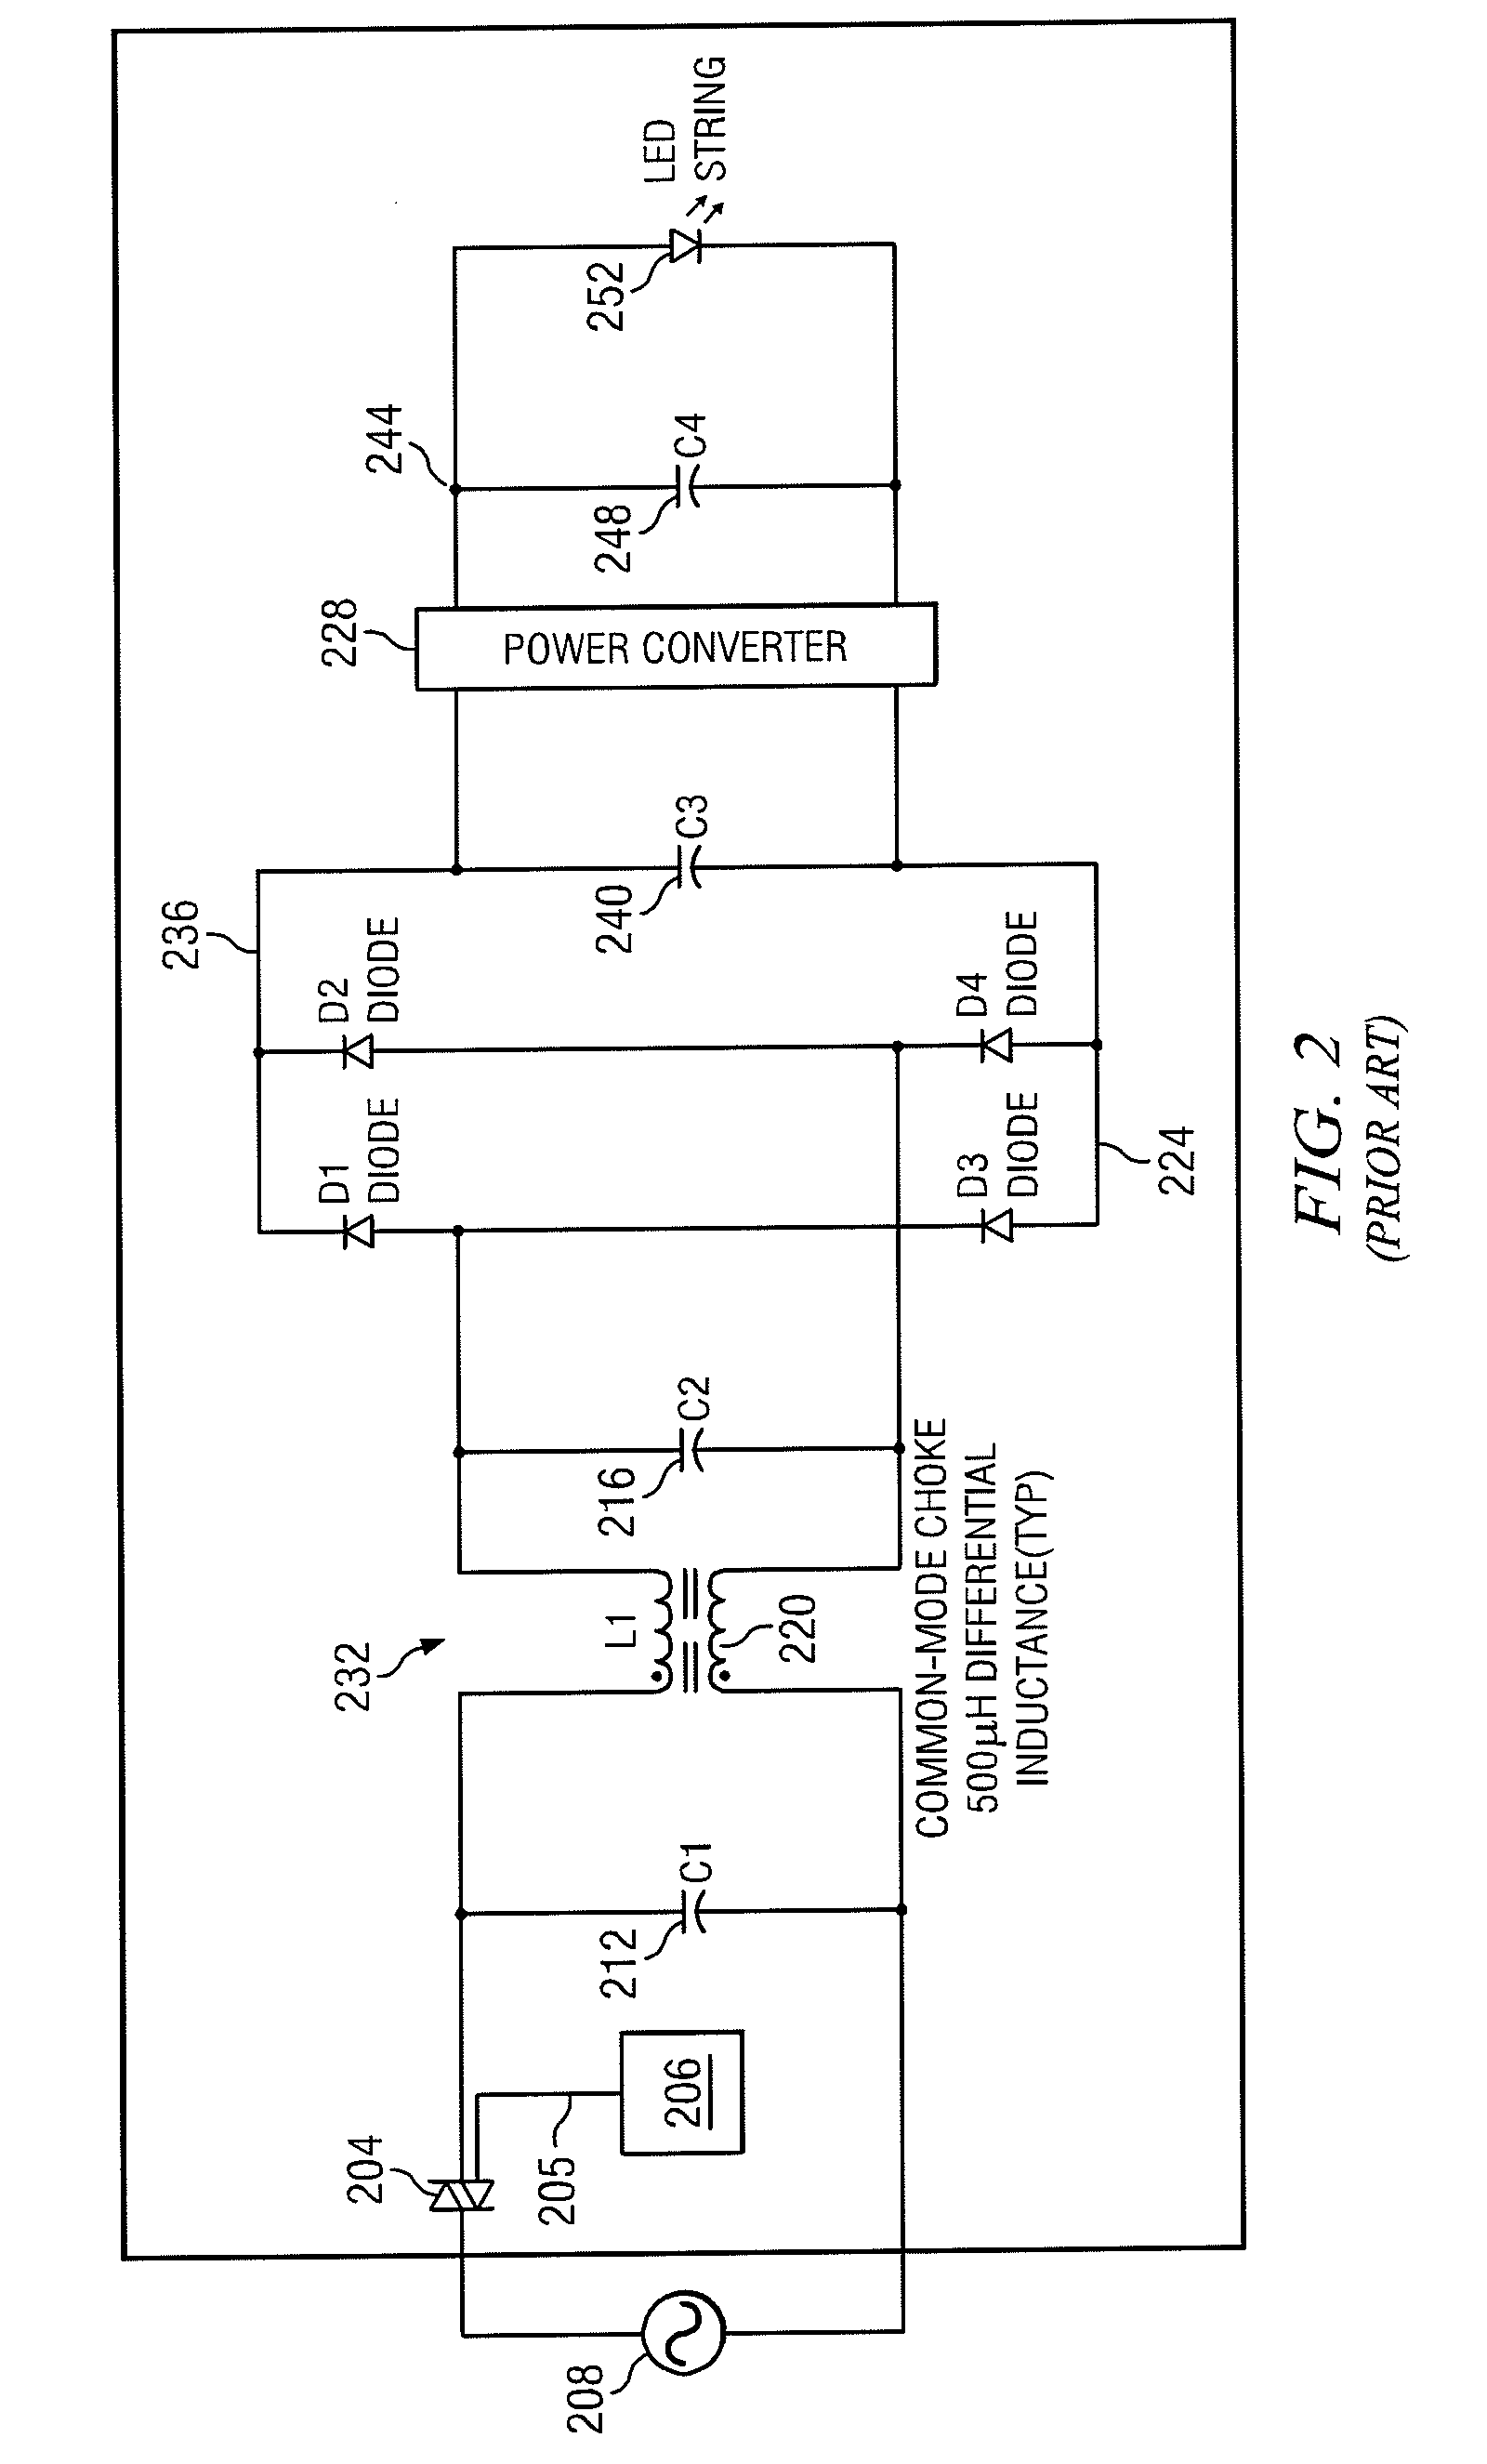 Thyristor power control circuit